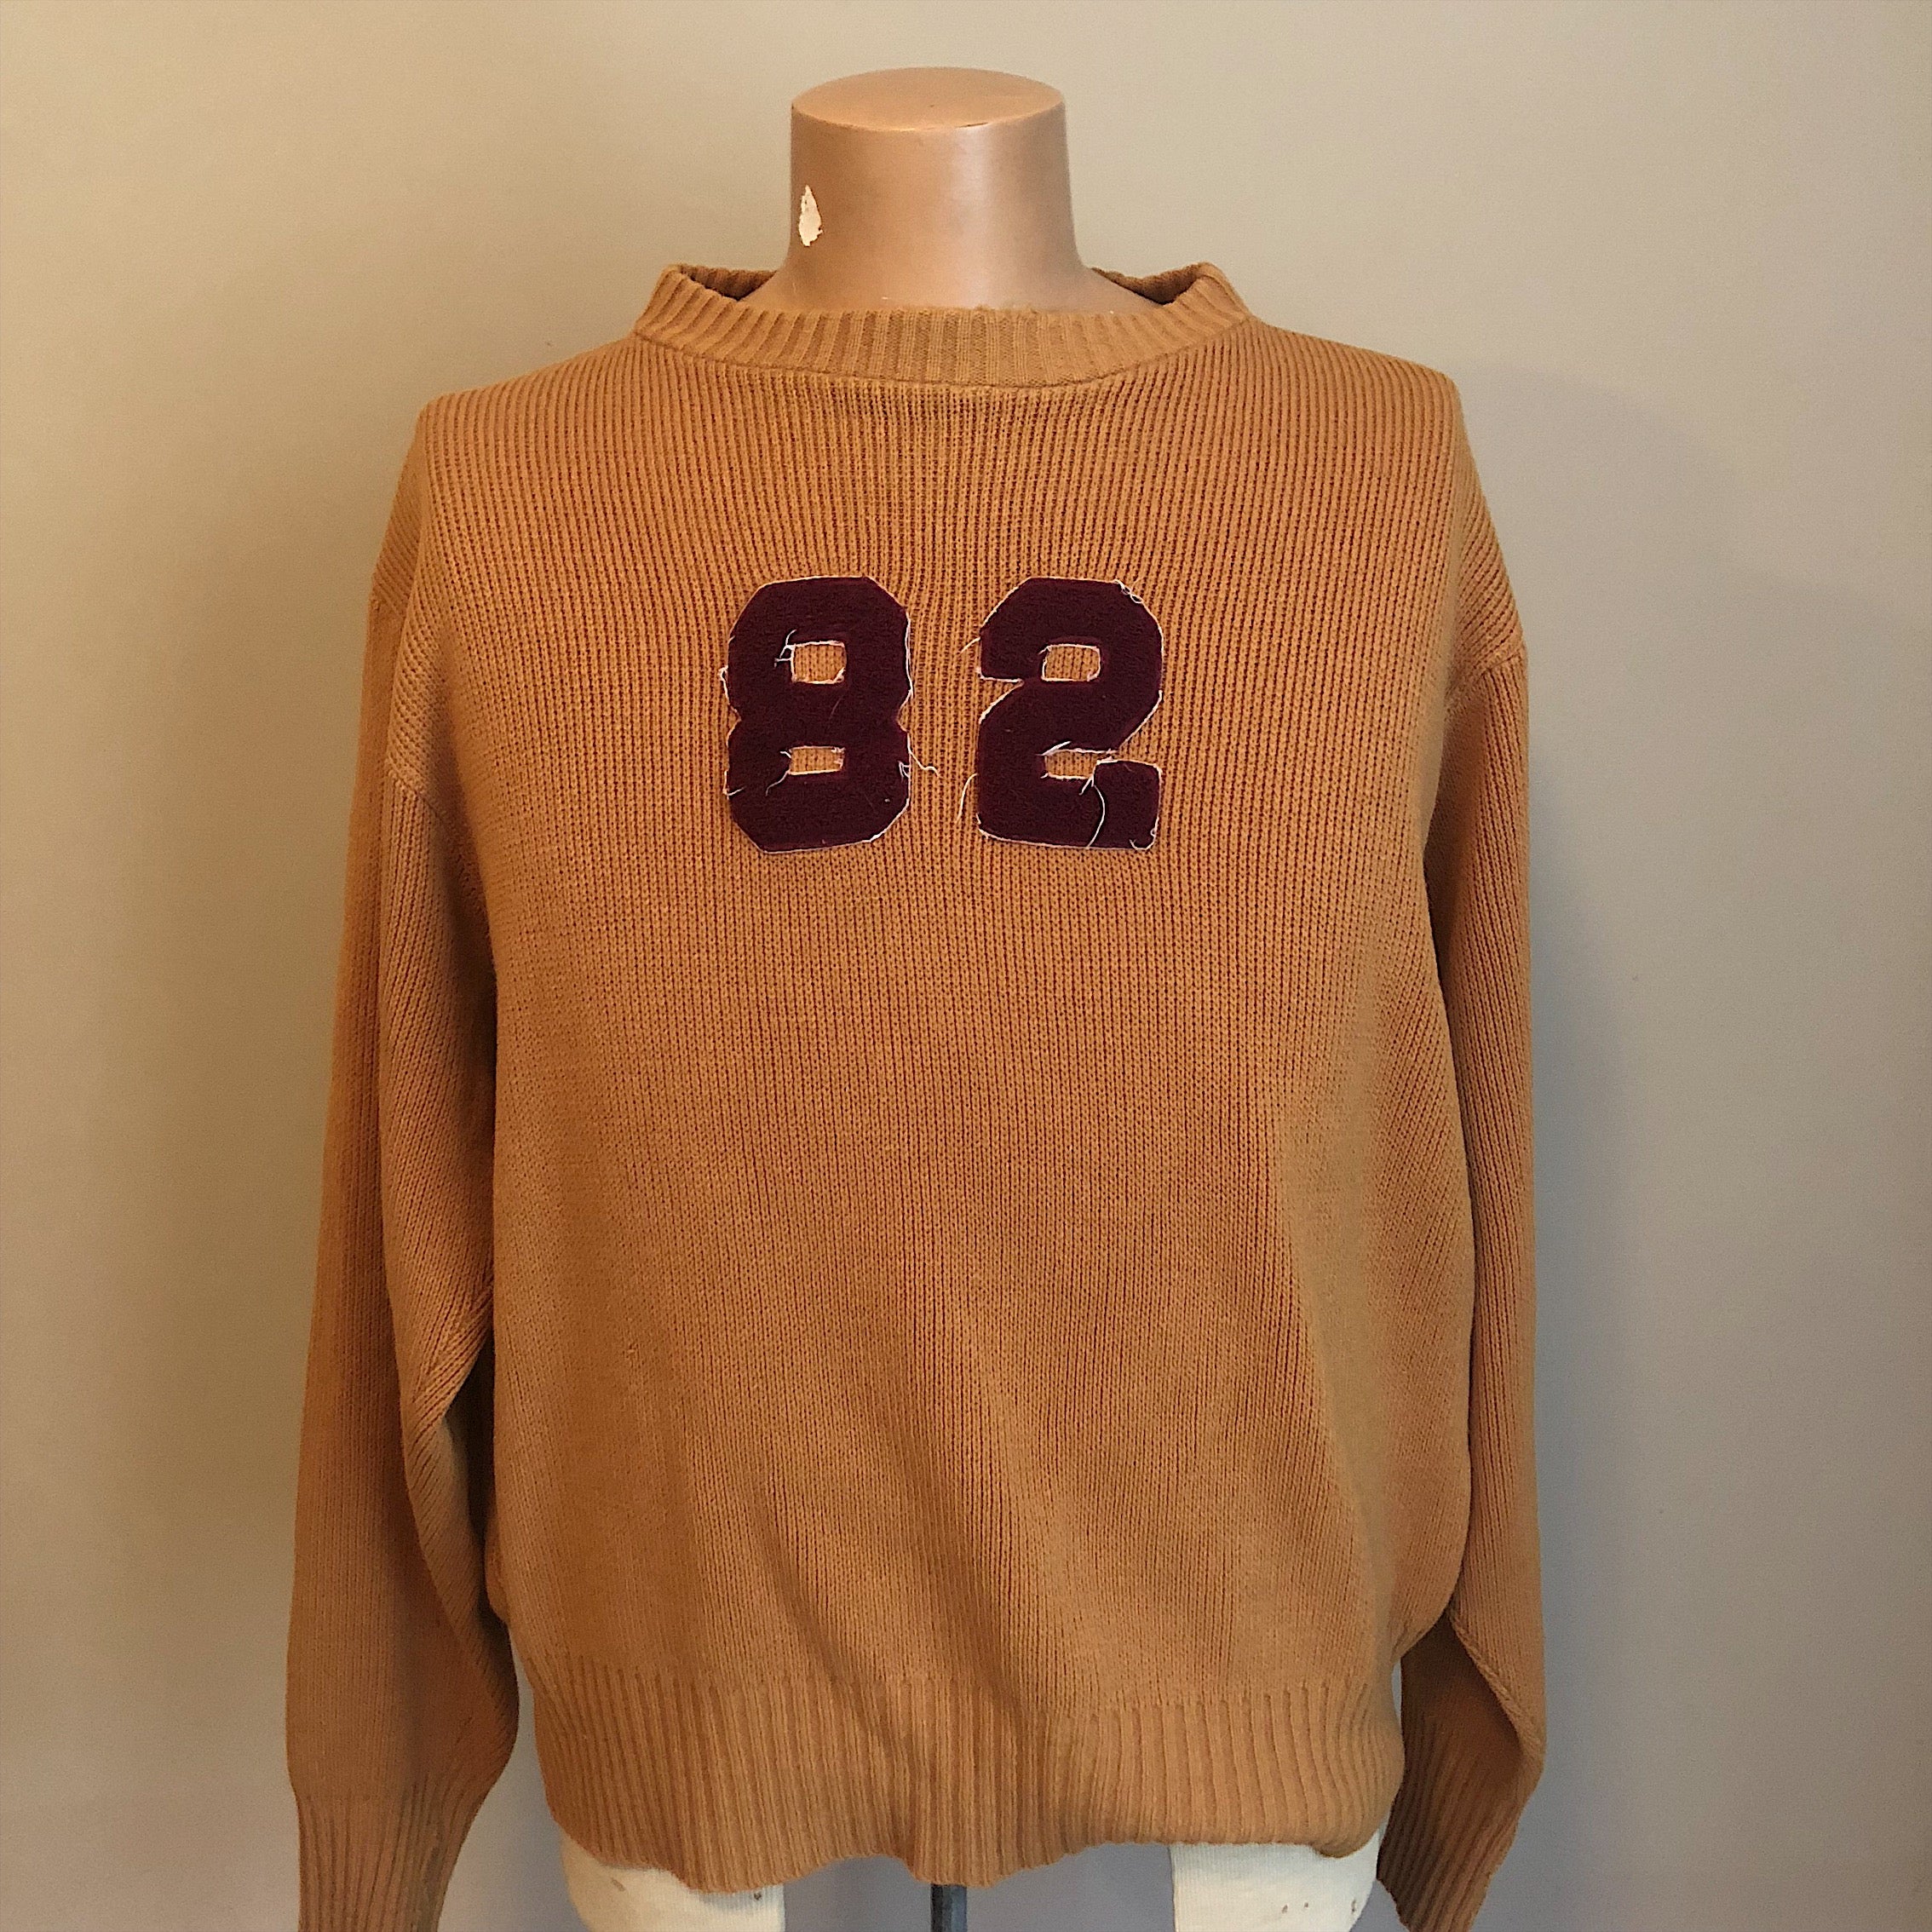 Vintage Varsity Sweater by East-Tenn  -  1960s or 70s - Orlon Acrylic - University of Minnesota - XXL? -Gold 